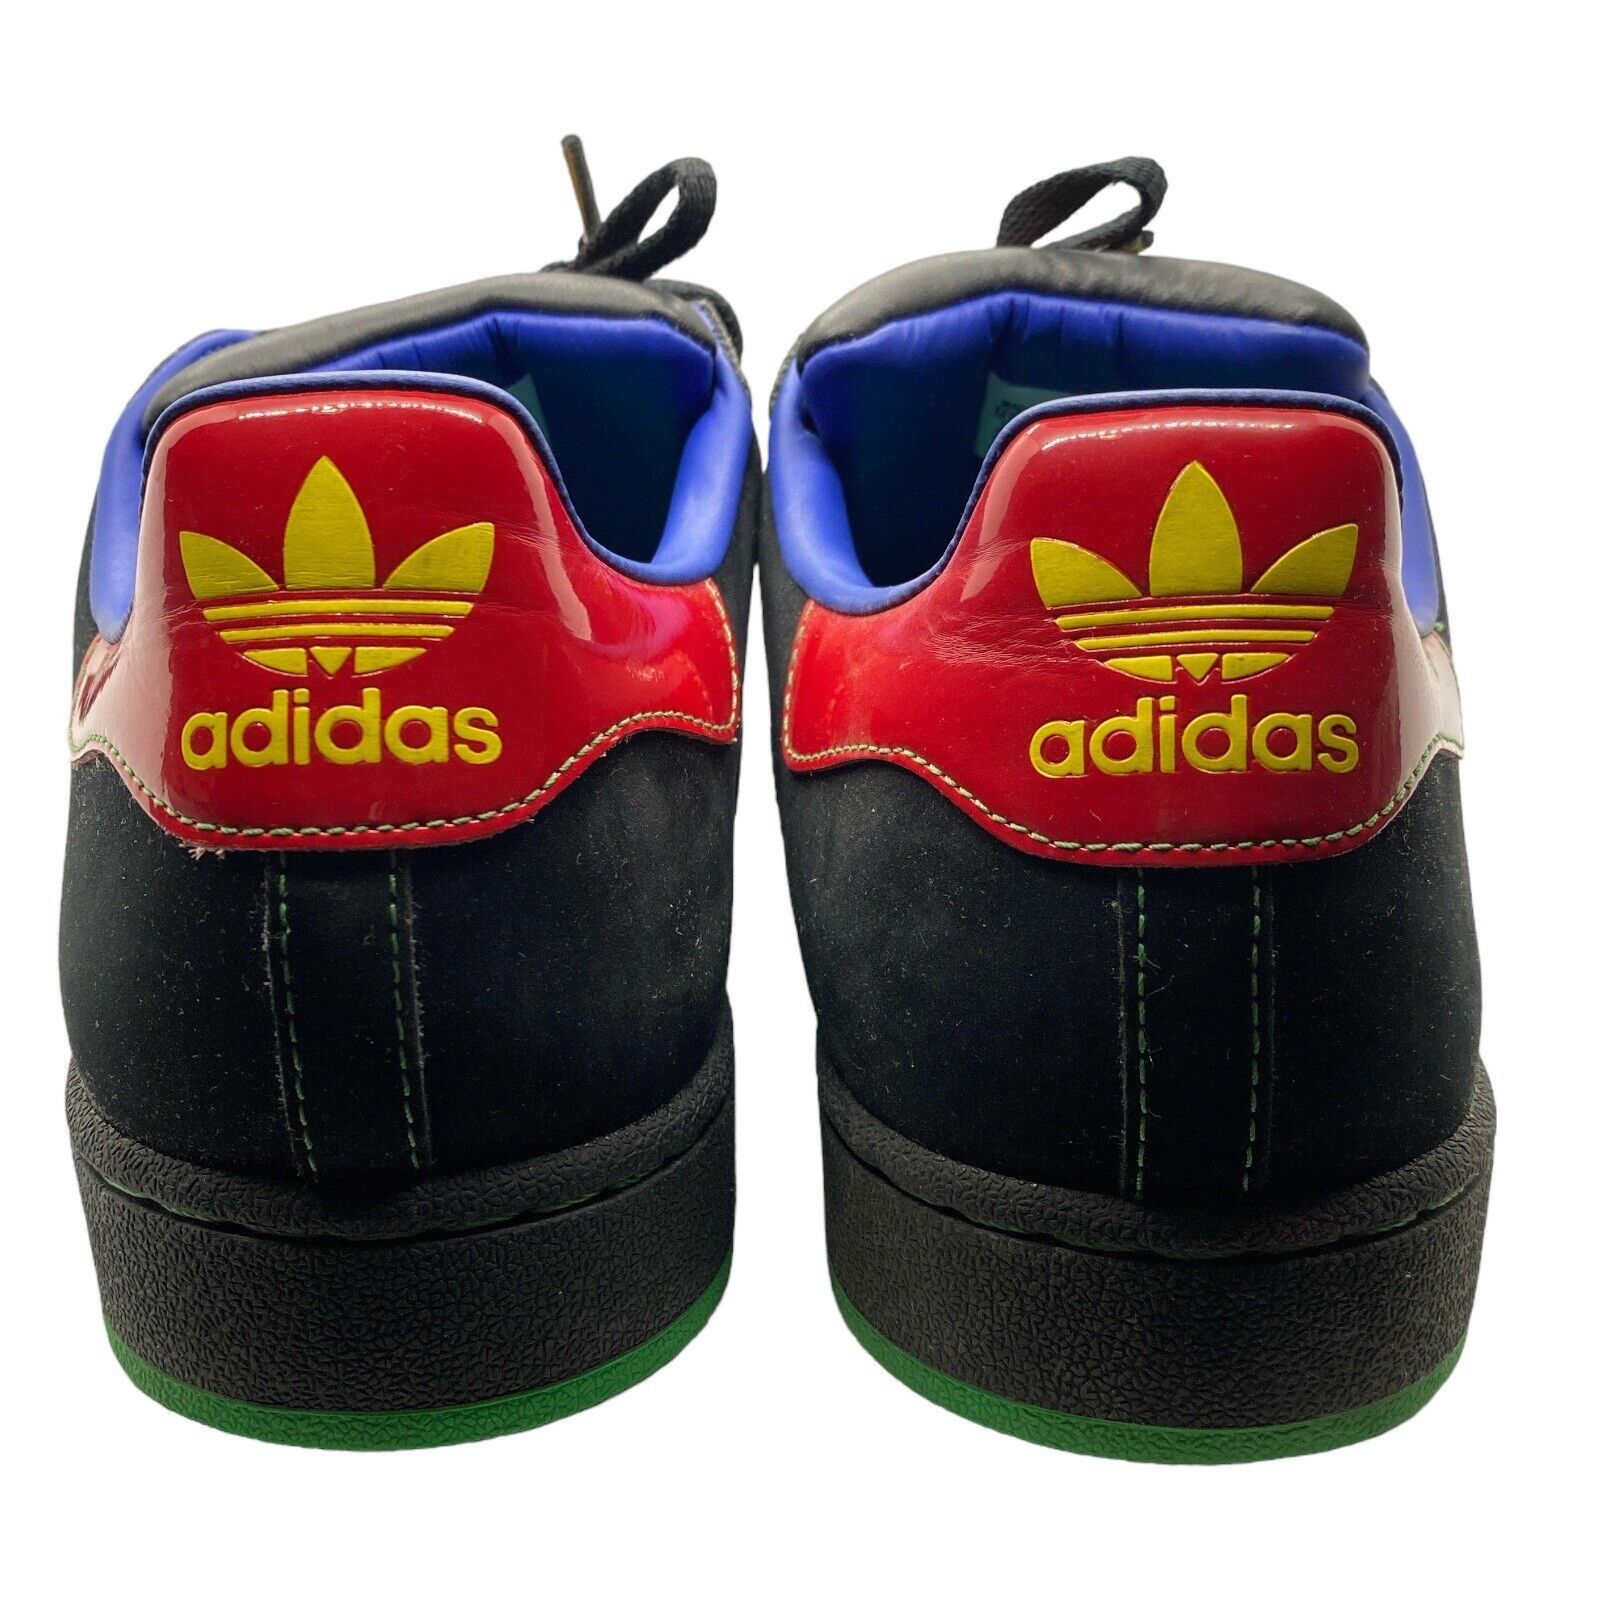 Adidas ADIDAS Original Superstar 2 II CB Black Shell Mens Sneakers Size US 13 / EU 46 - 6 Thumbnail